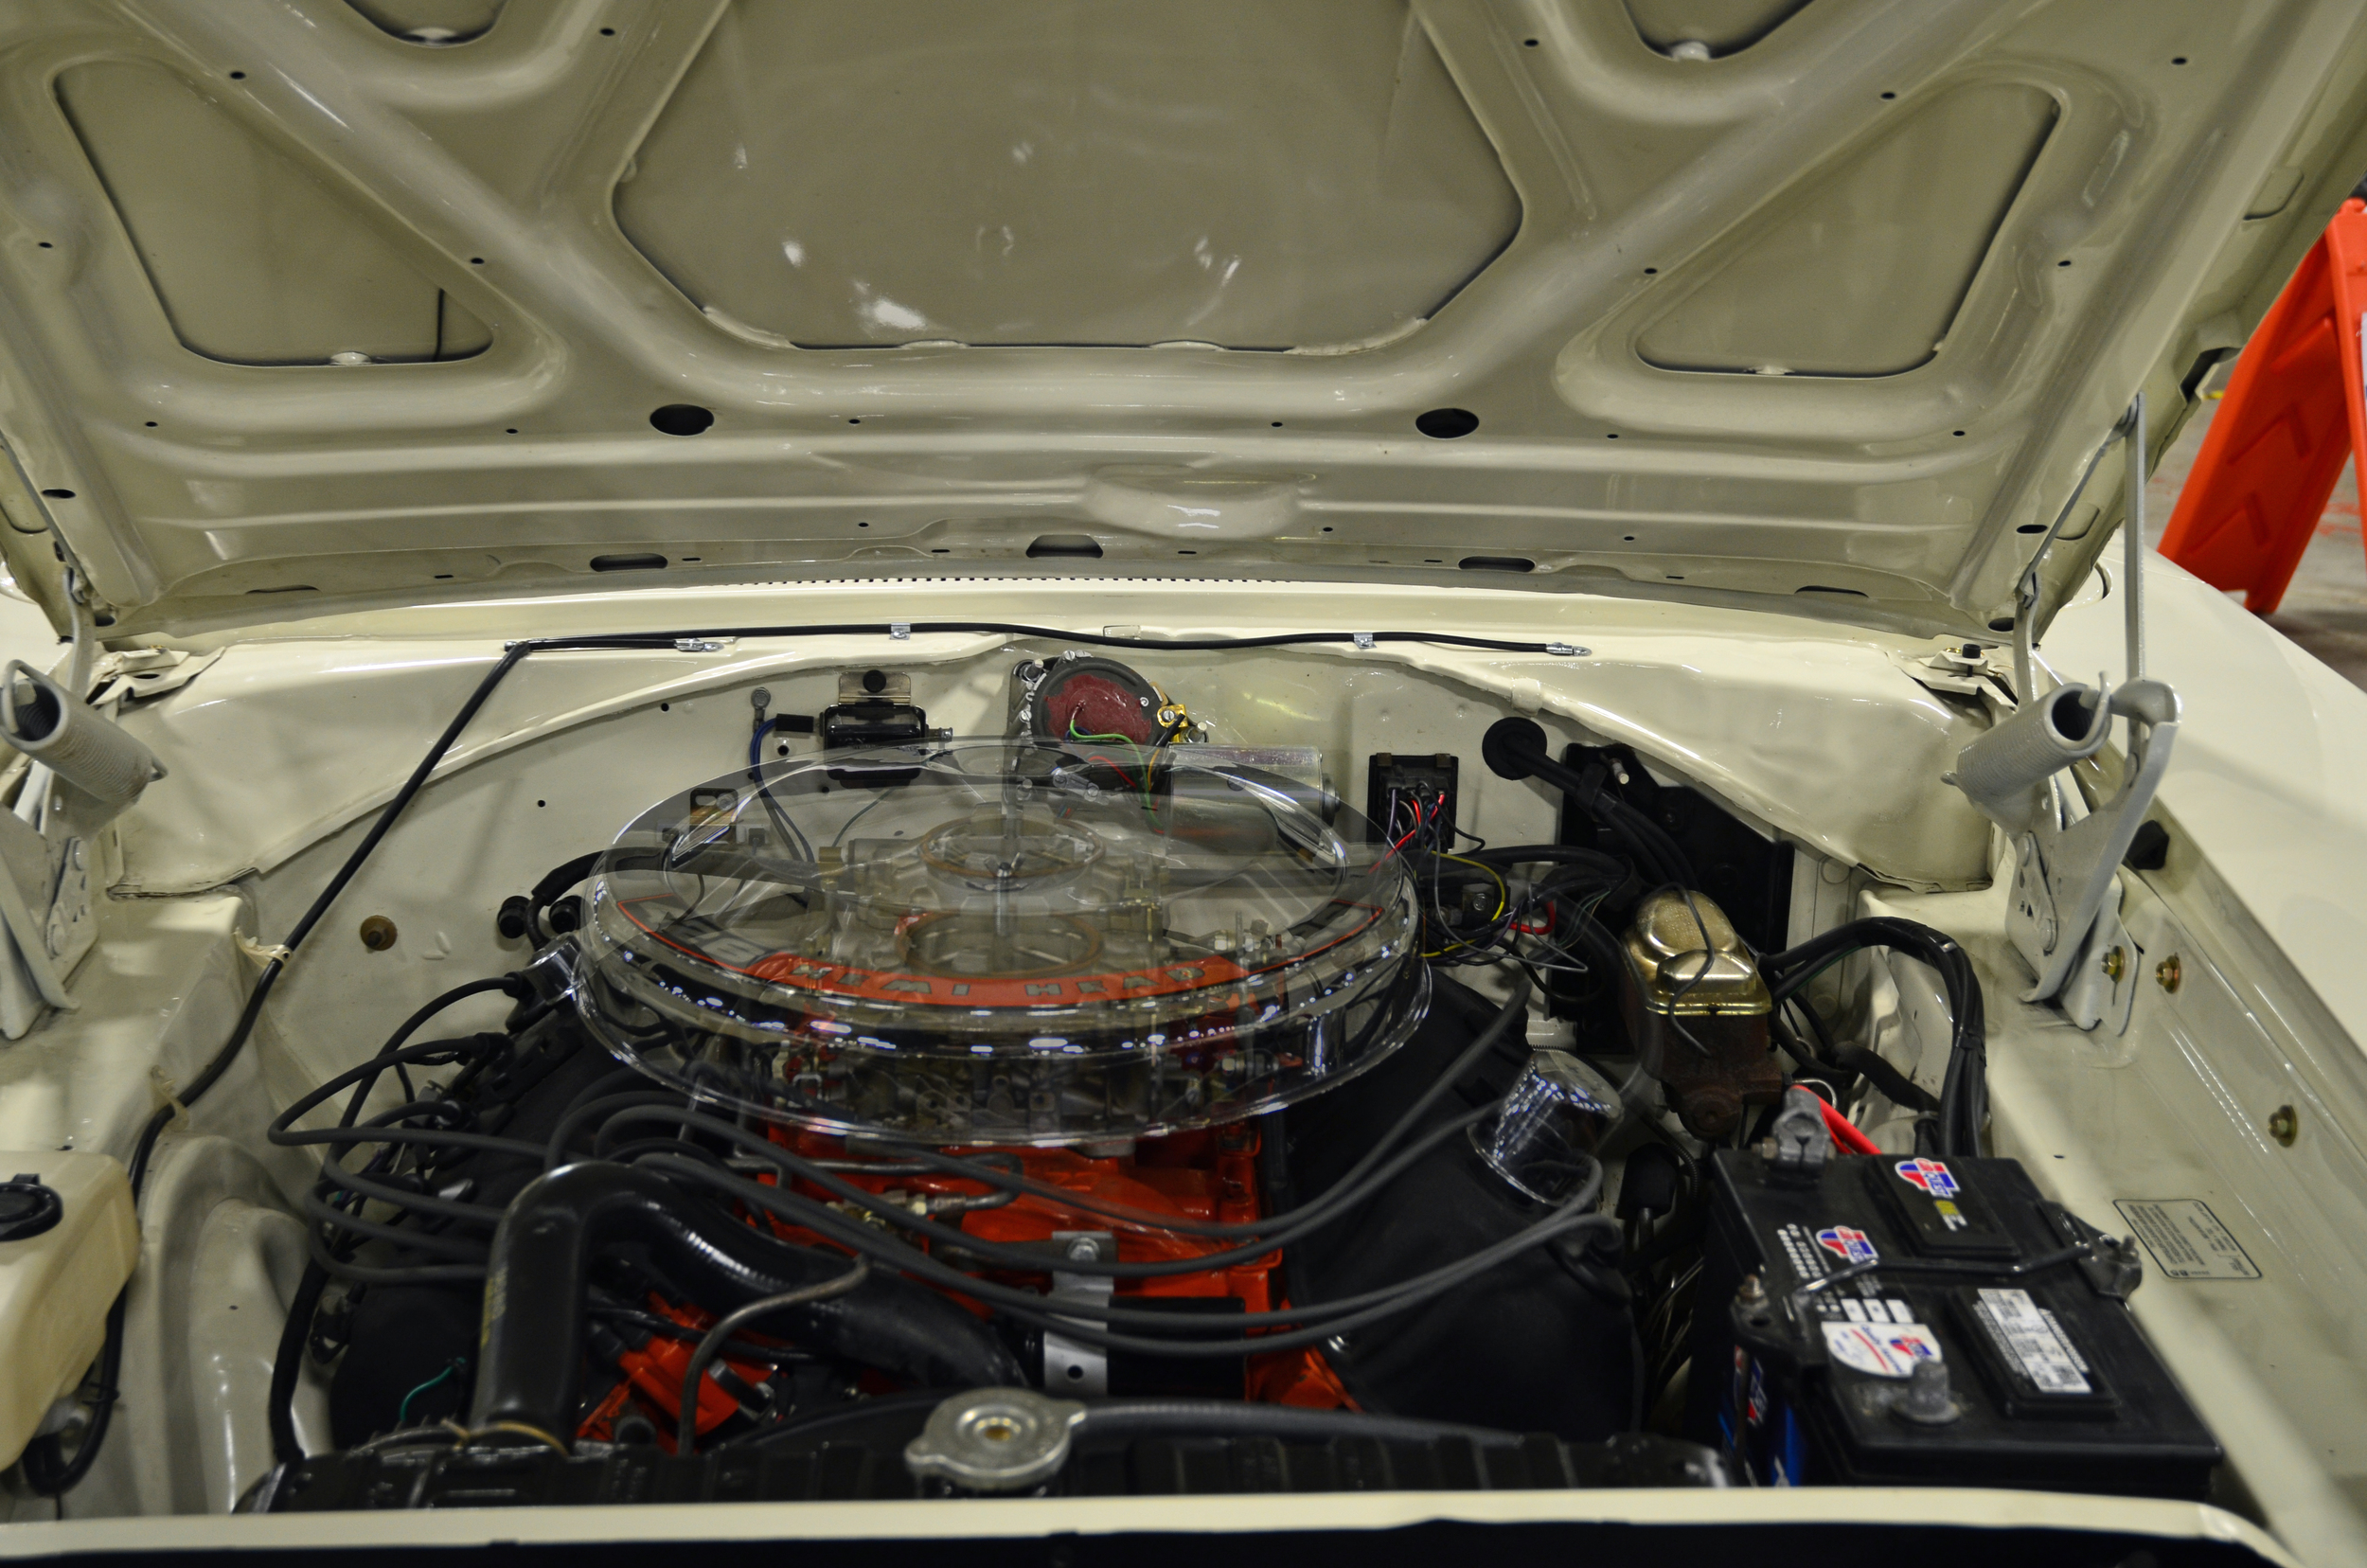 1969 Dodge Charger Hemi engine 426